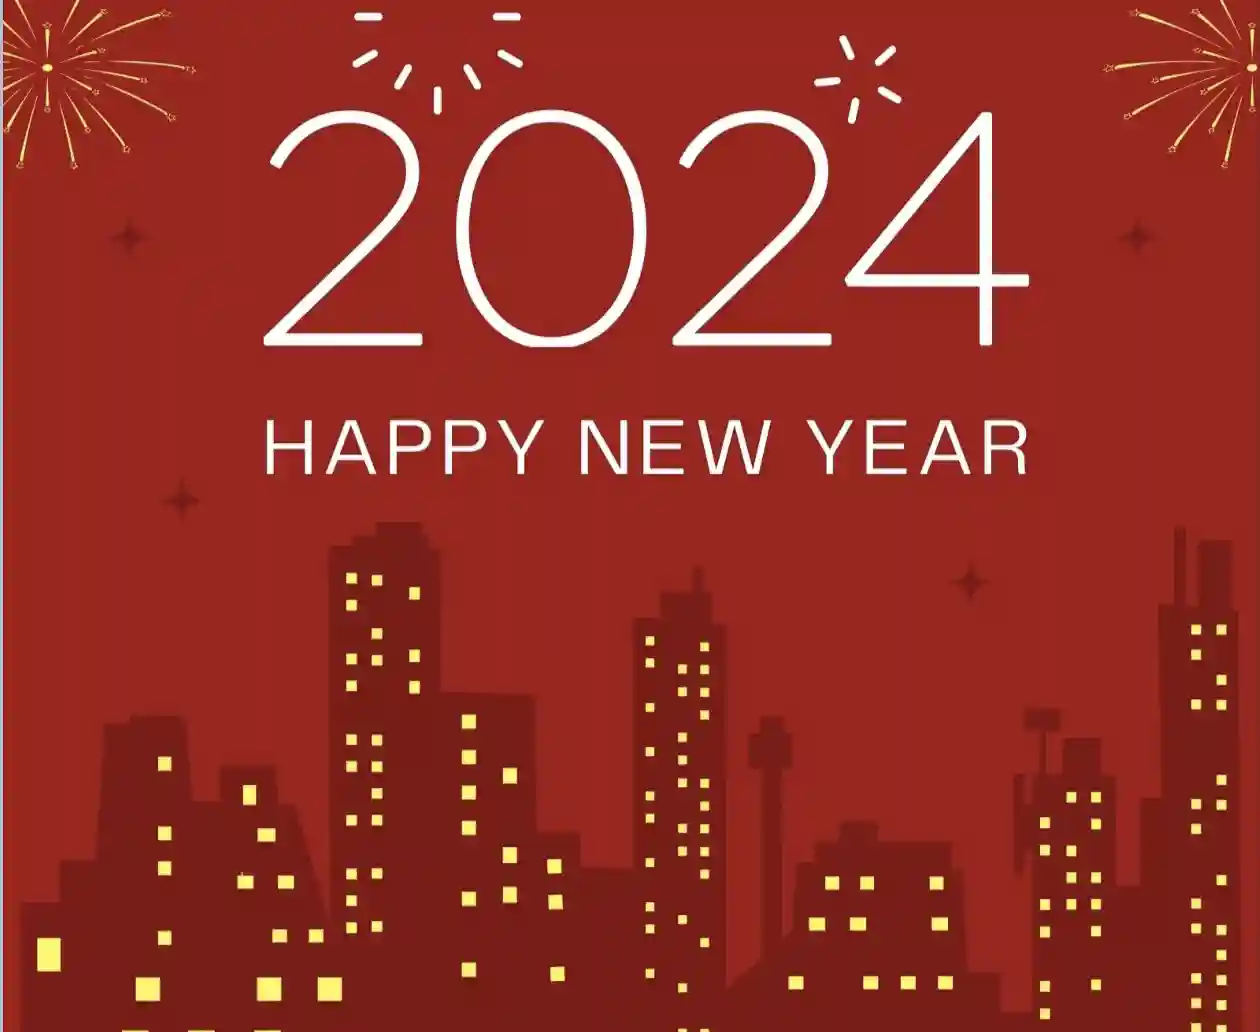 Happy New Year 2024 Wishes: প্রিয়জনদের জানান নতুন বছরের শুভেচ্ছাবার্তা, স্ট্যাটাস, শায়েরি ও পিকচার